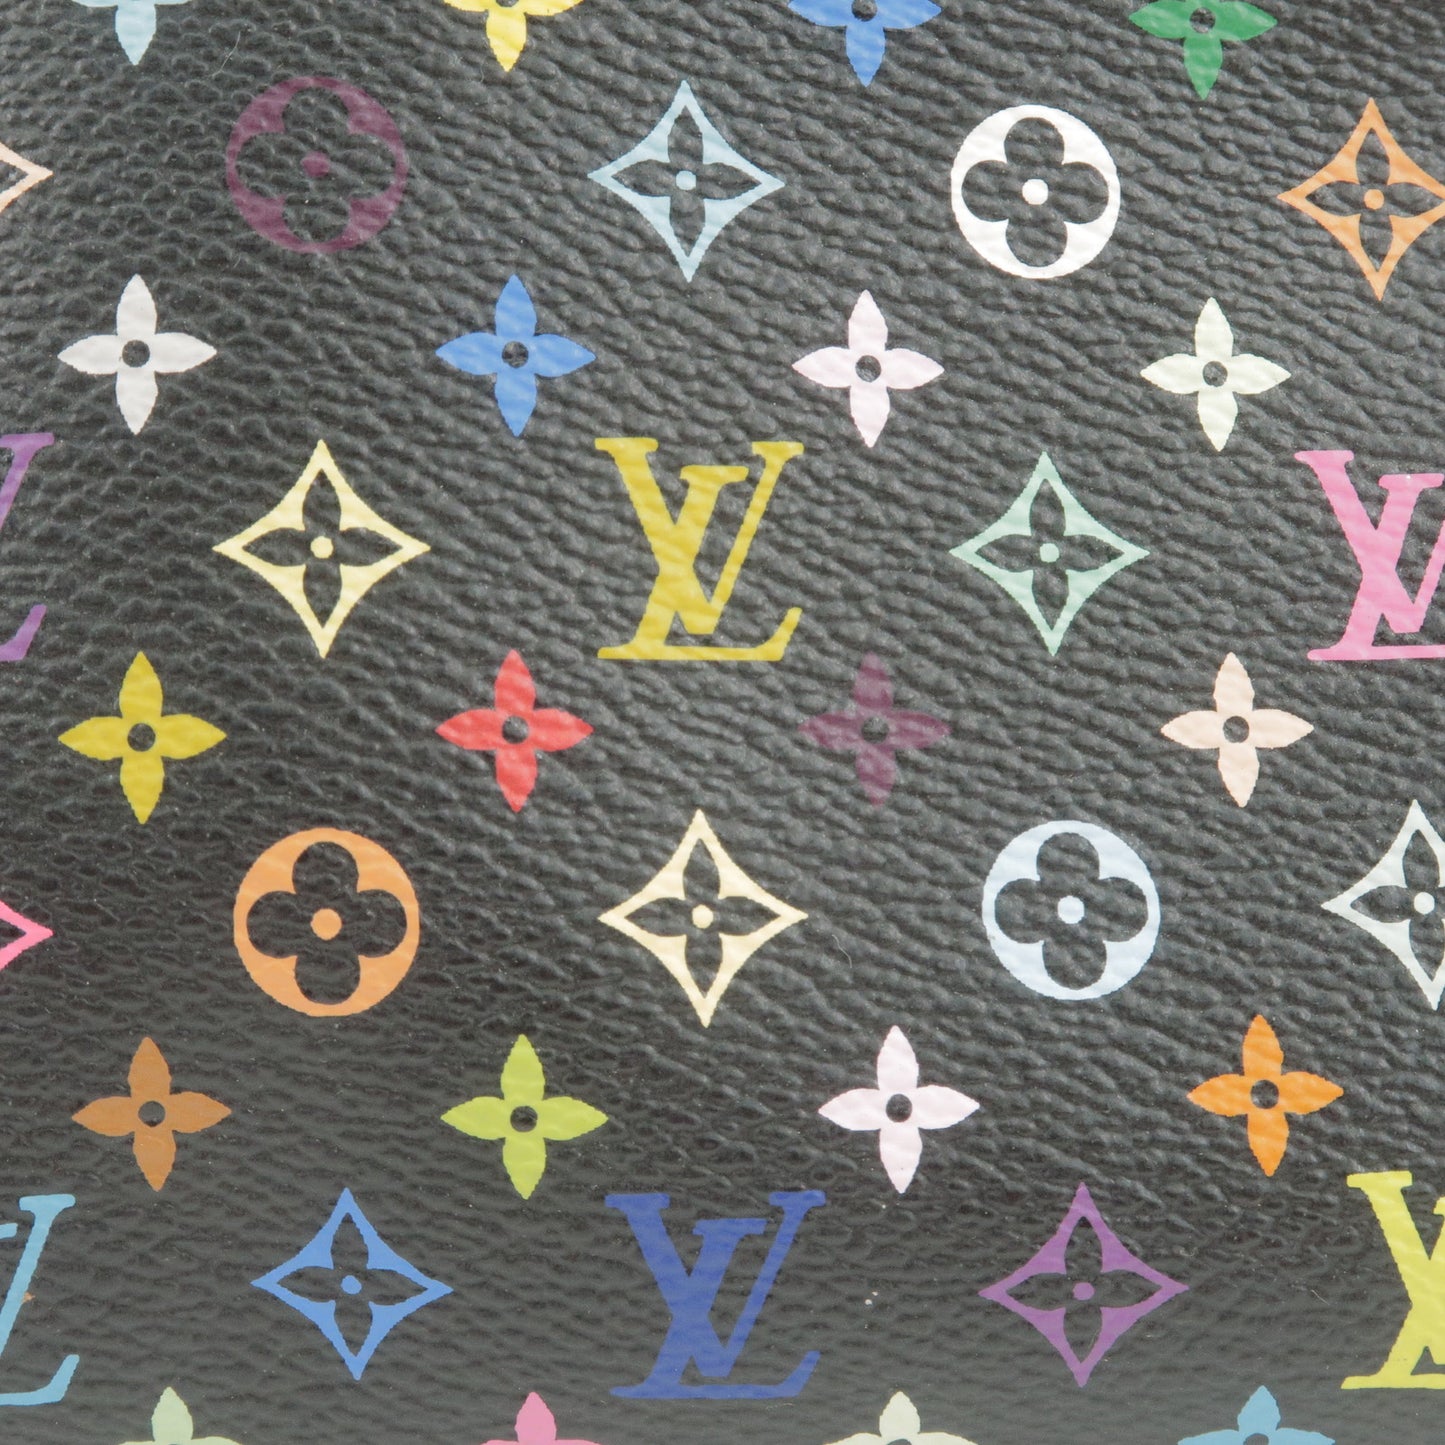 Louis Vuitton Monogram Multi Color Pochette Cosmetic M47355